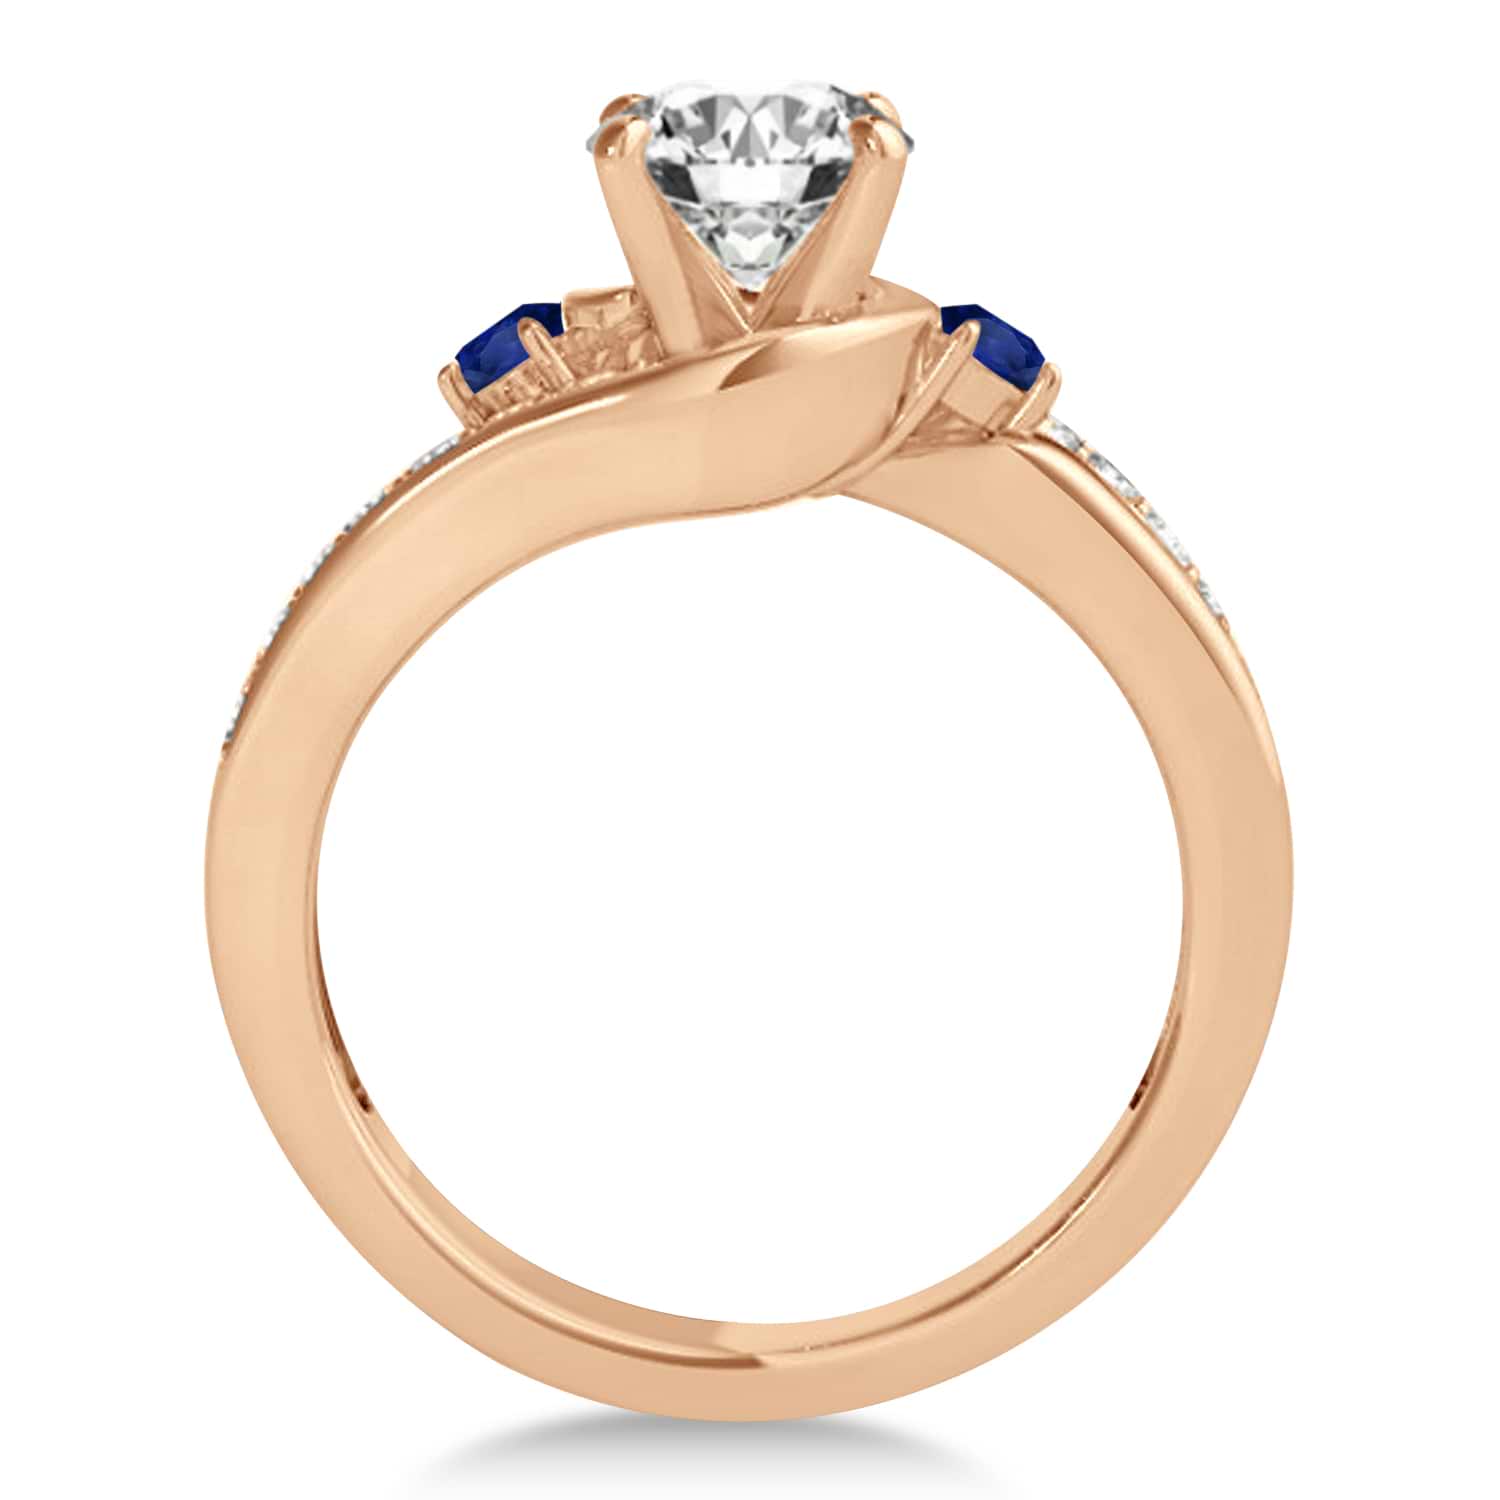 Swirl Design Blue Sapphire & Diamond Engagement Ring Setting 18k Rose Gold 0.38ct